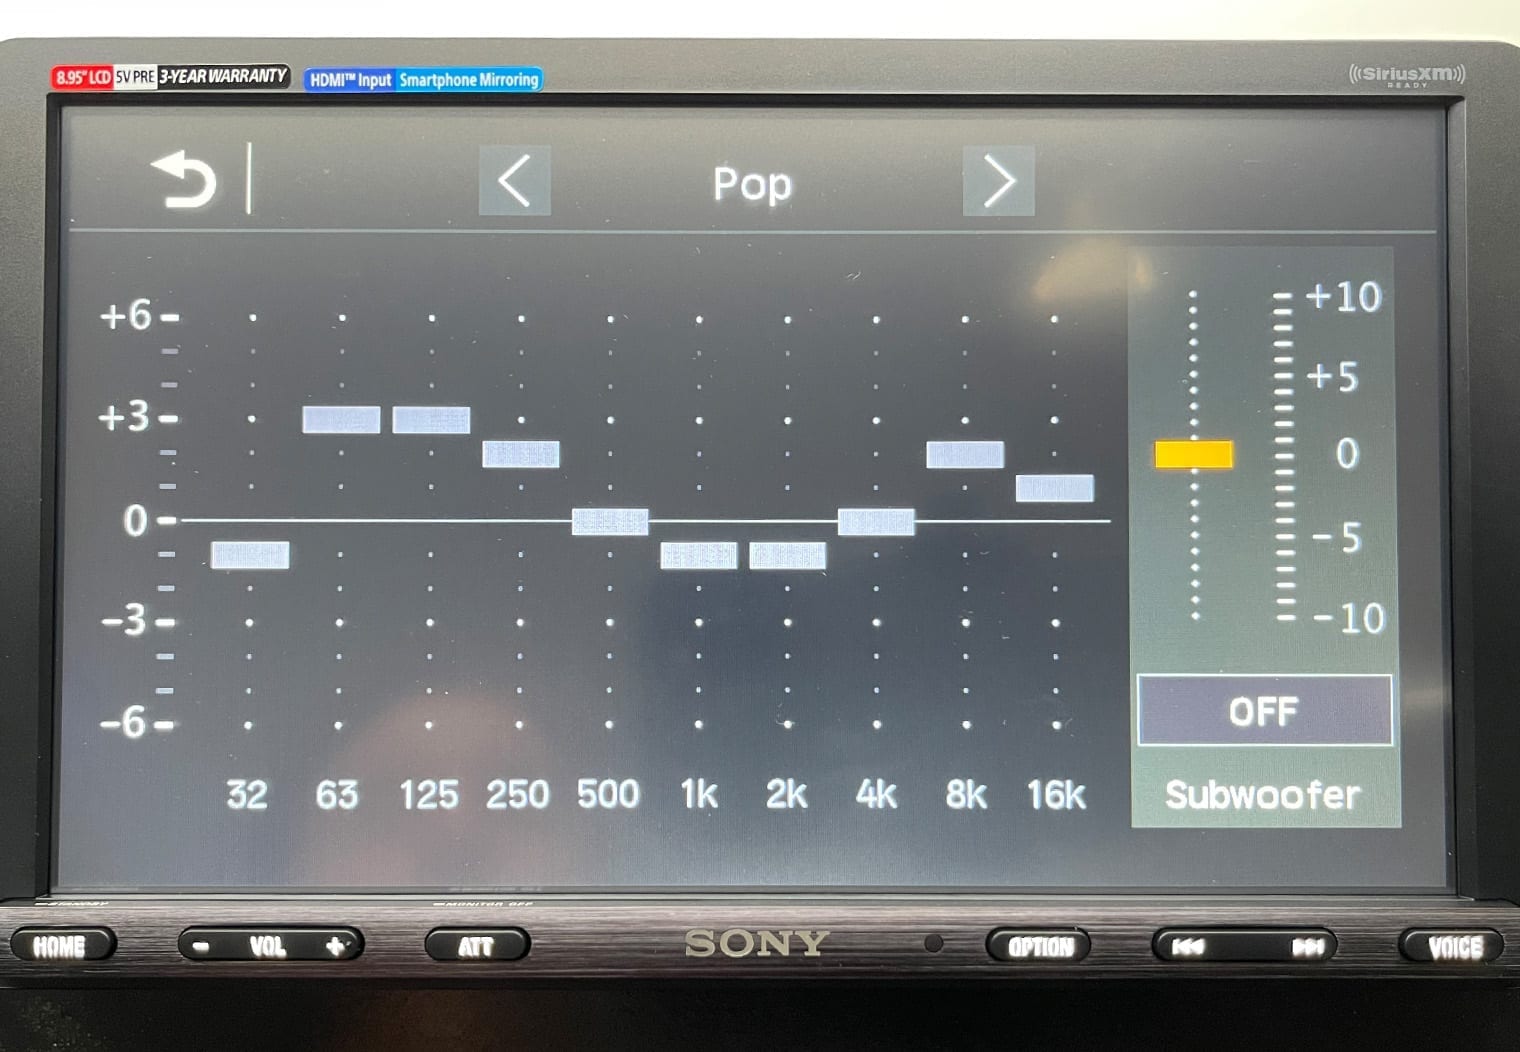 Sony XAV-AX8100 pop eq preset